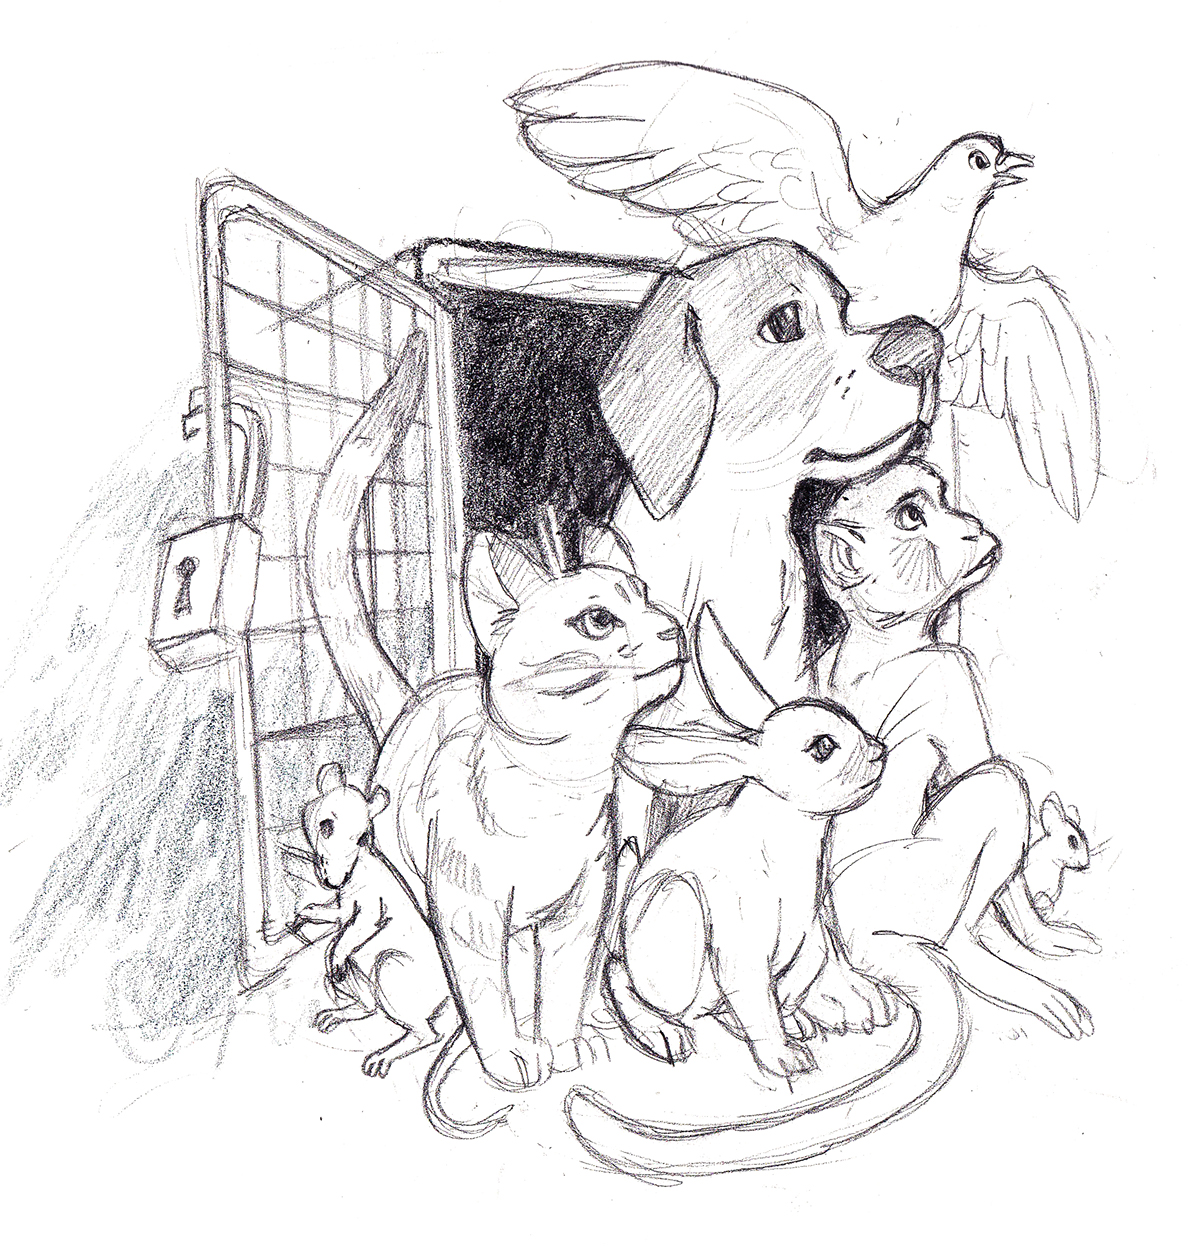 contest animals Cat dog beagle bird rabbit rat cage non profit animal rights animal testing anti-vivisection navs